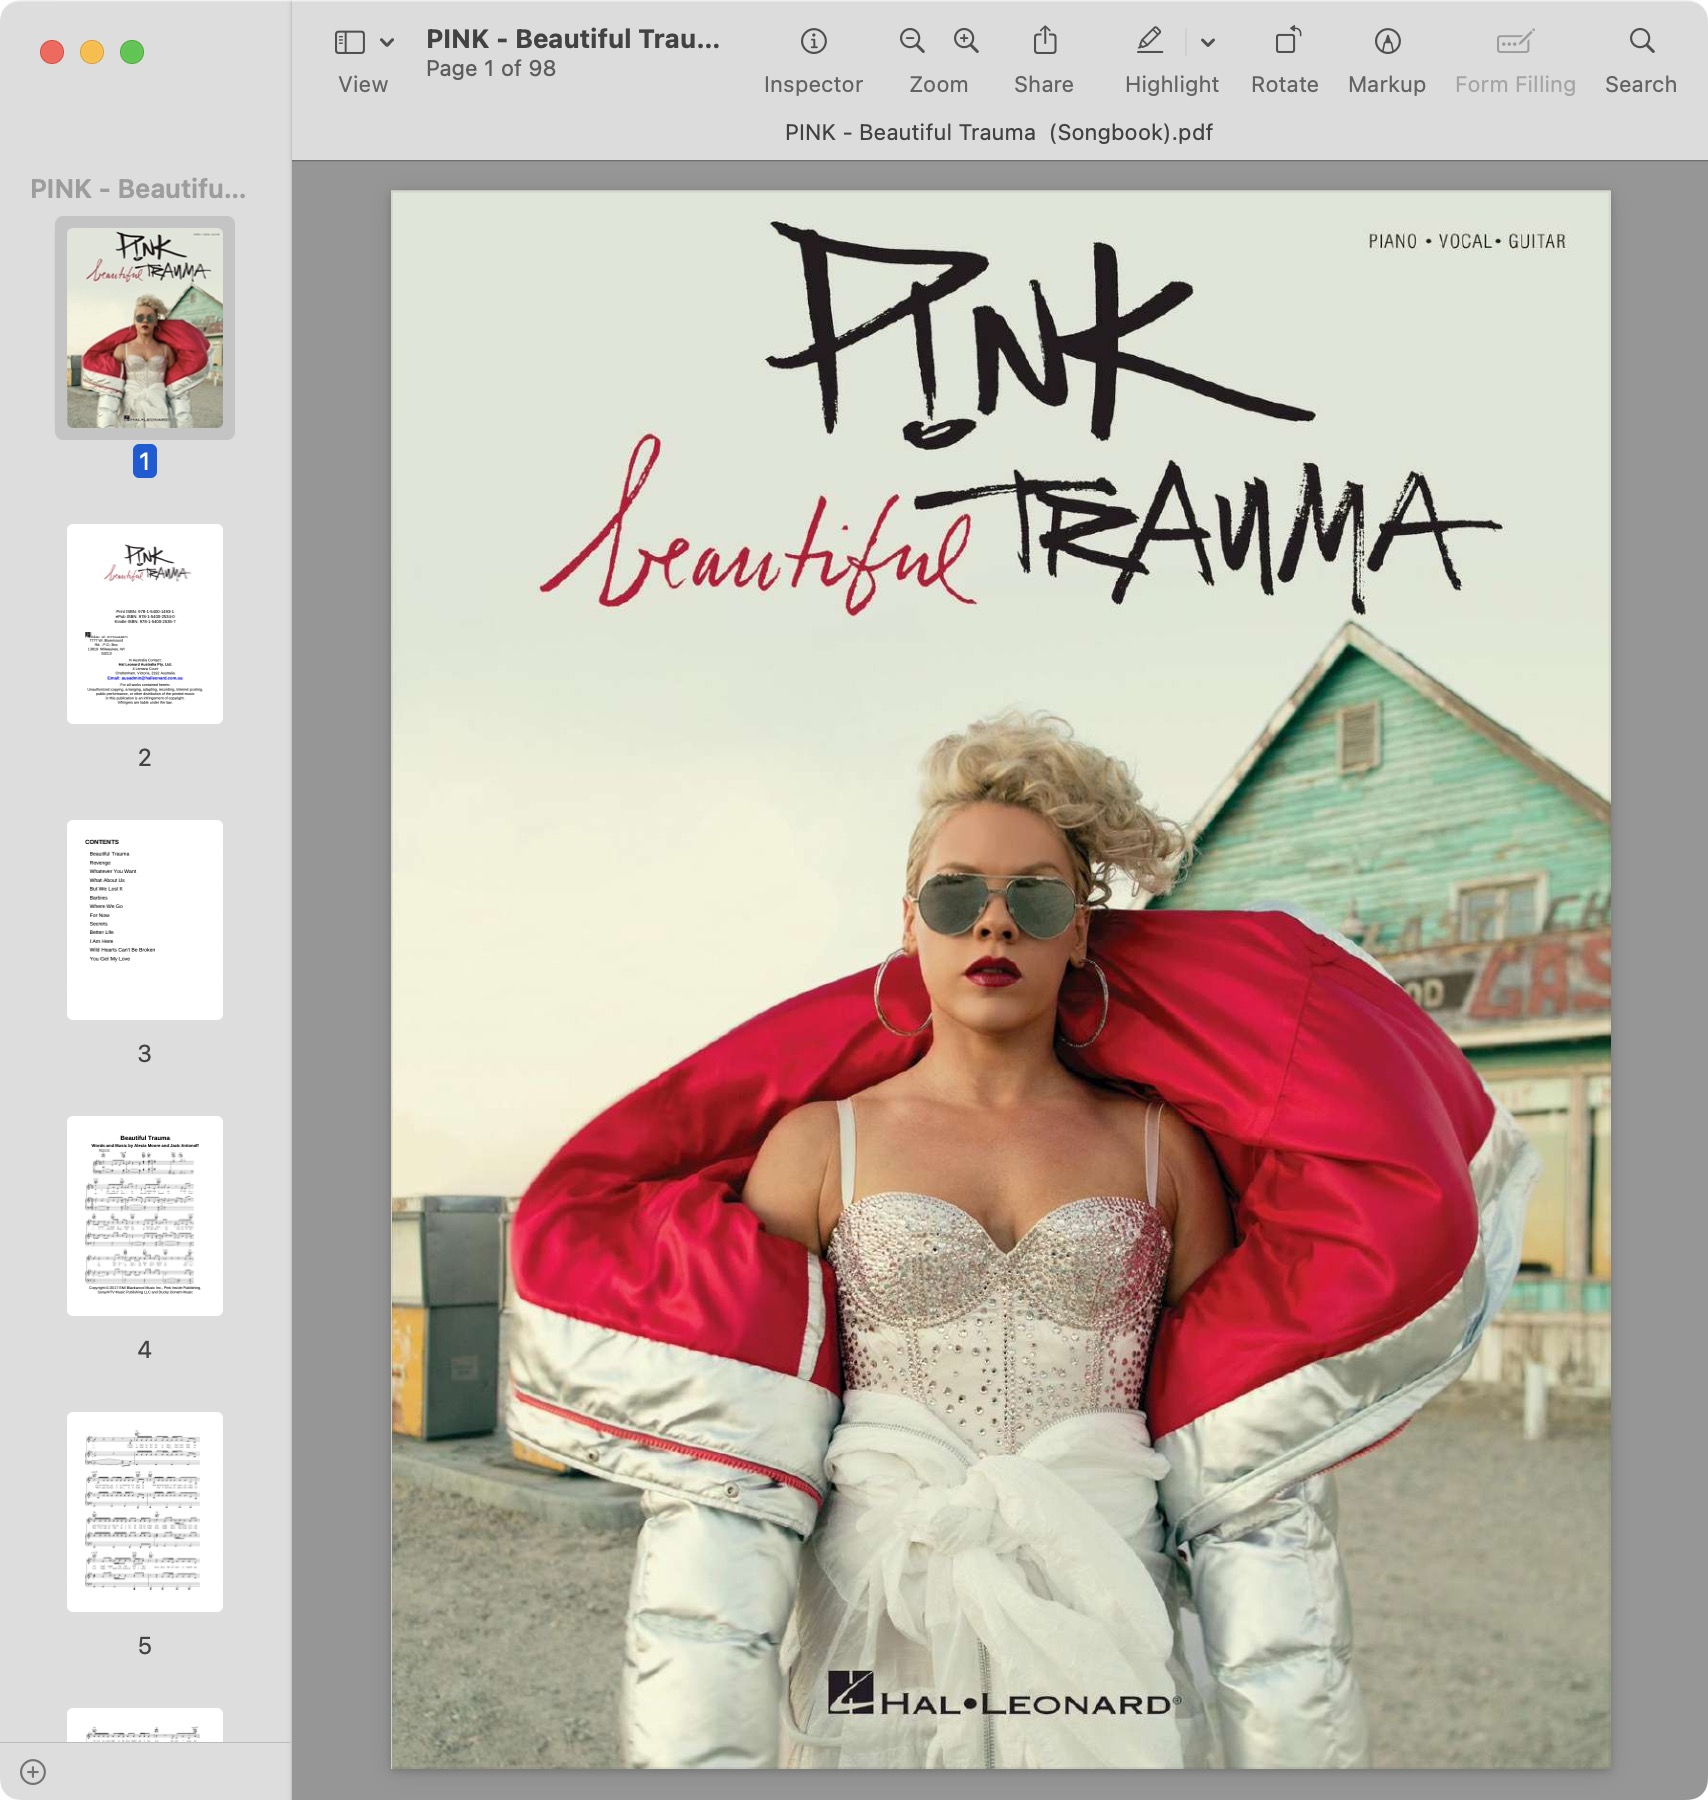 PINK - Beautiful Trauma  (Songbook).jpg